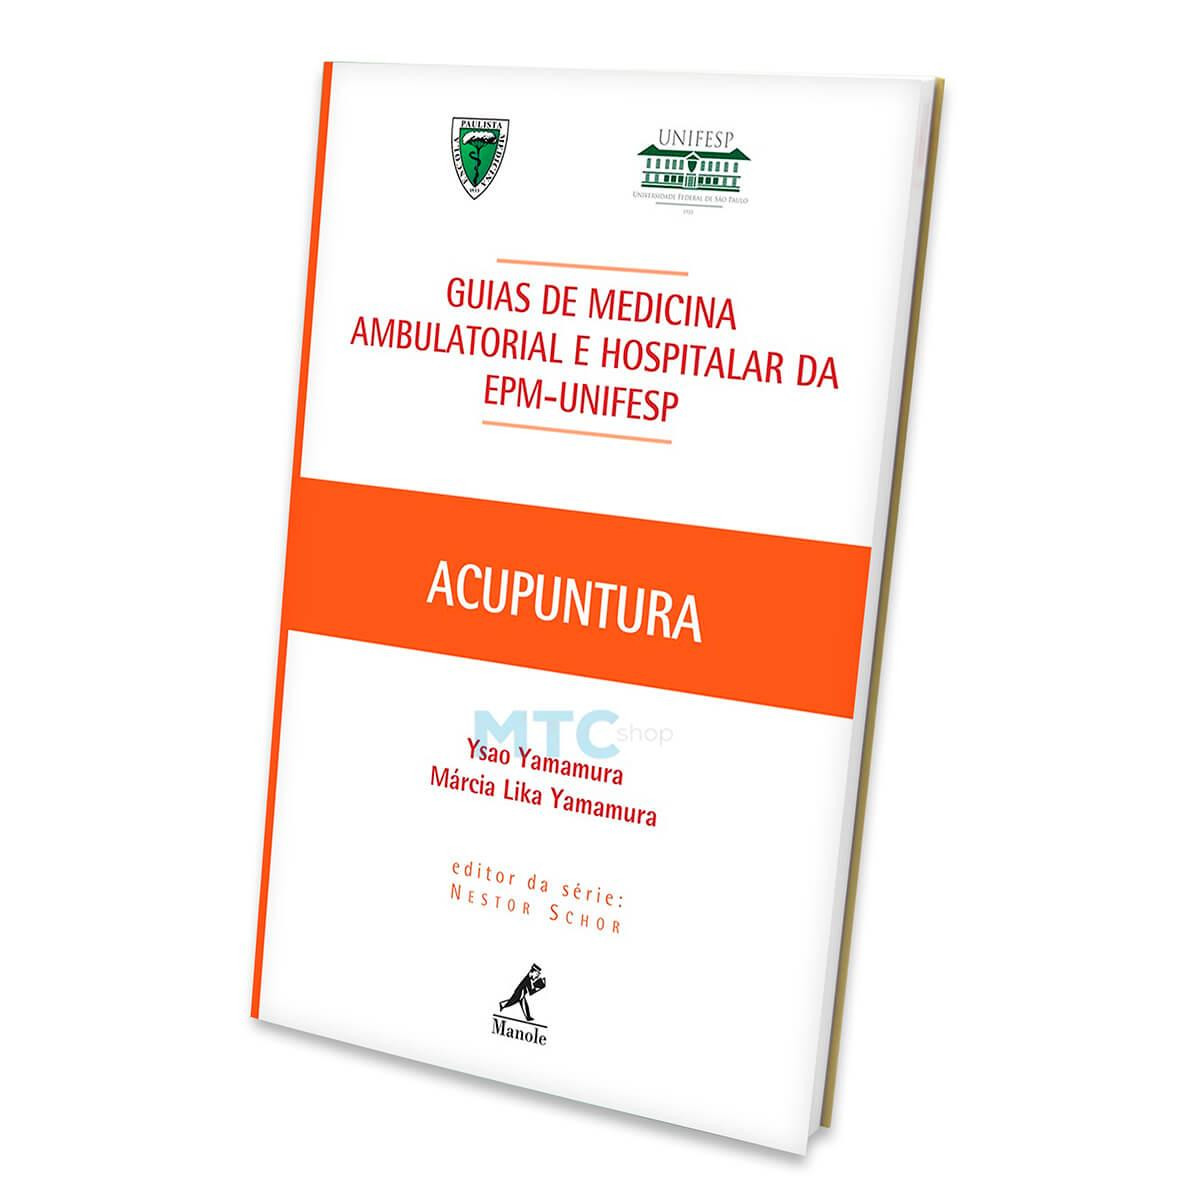 Guias de Medicina Ambulatorial e Hospitalar da EPM-UNIFESP - Ed Manole